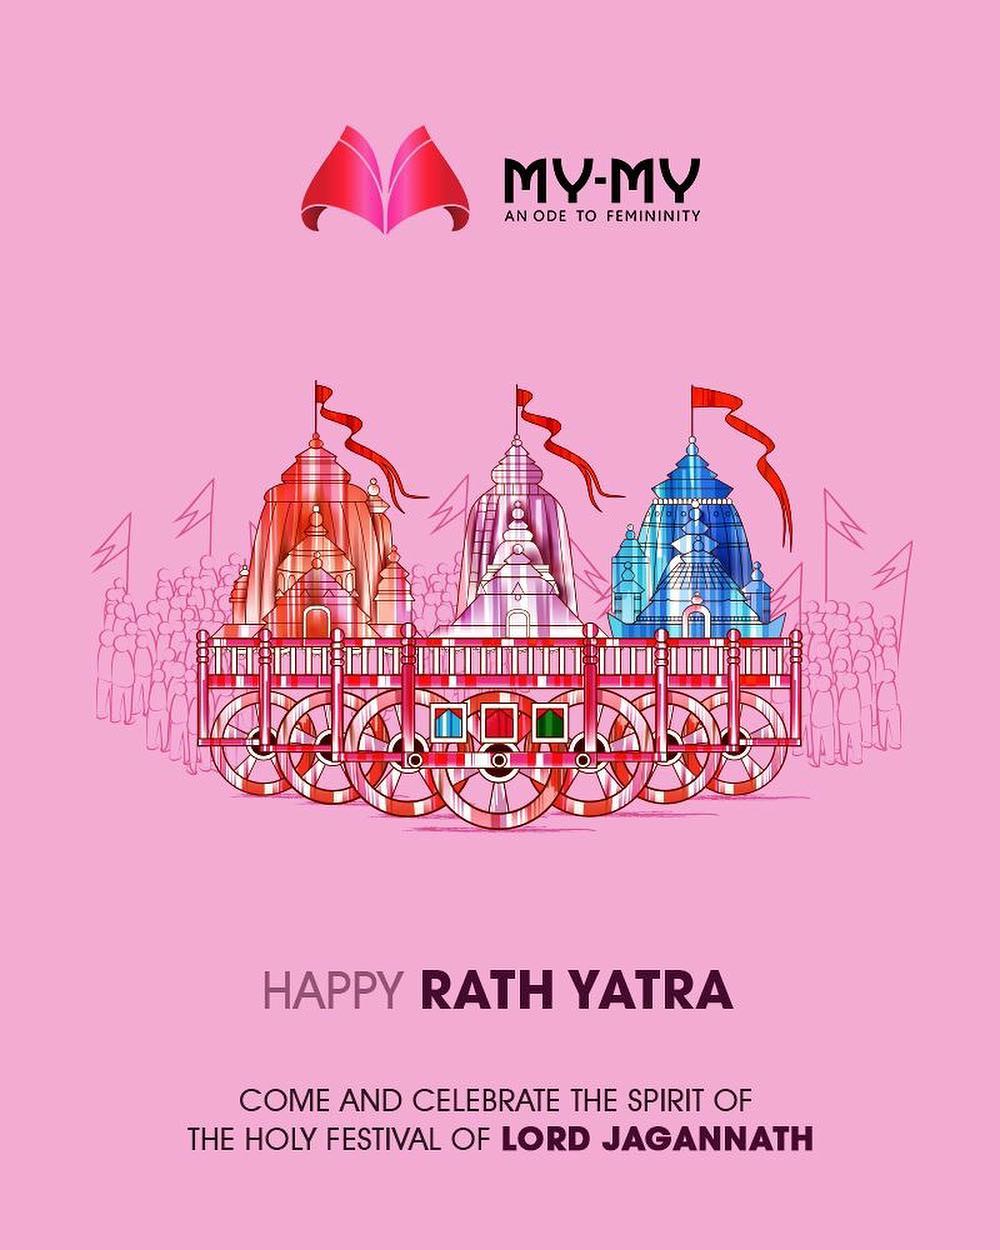 My-My,  RathYatra2018, Jagannath, RathYatra, JagannathTemple, LordJagannath, FestivalOfChariots, Spirituality, MyMy, MyMyAhmedabad, Fashion, Ahmedabad, FemaleFashion